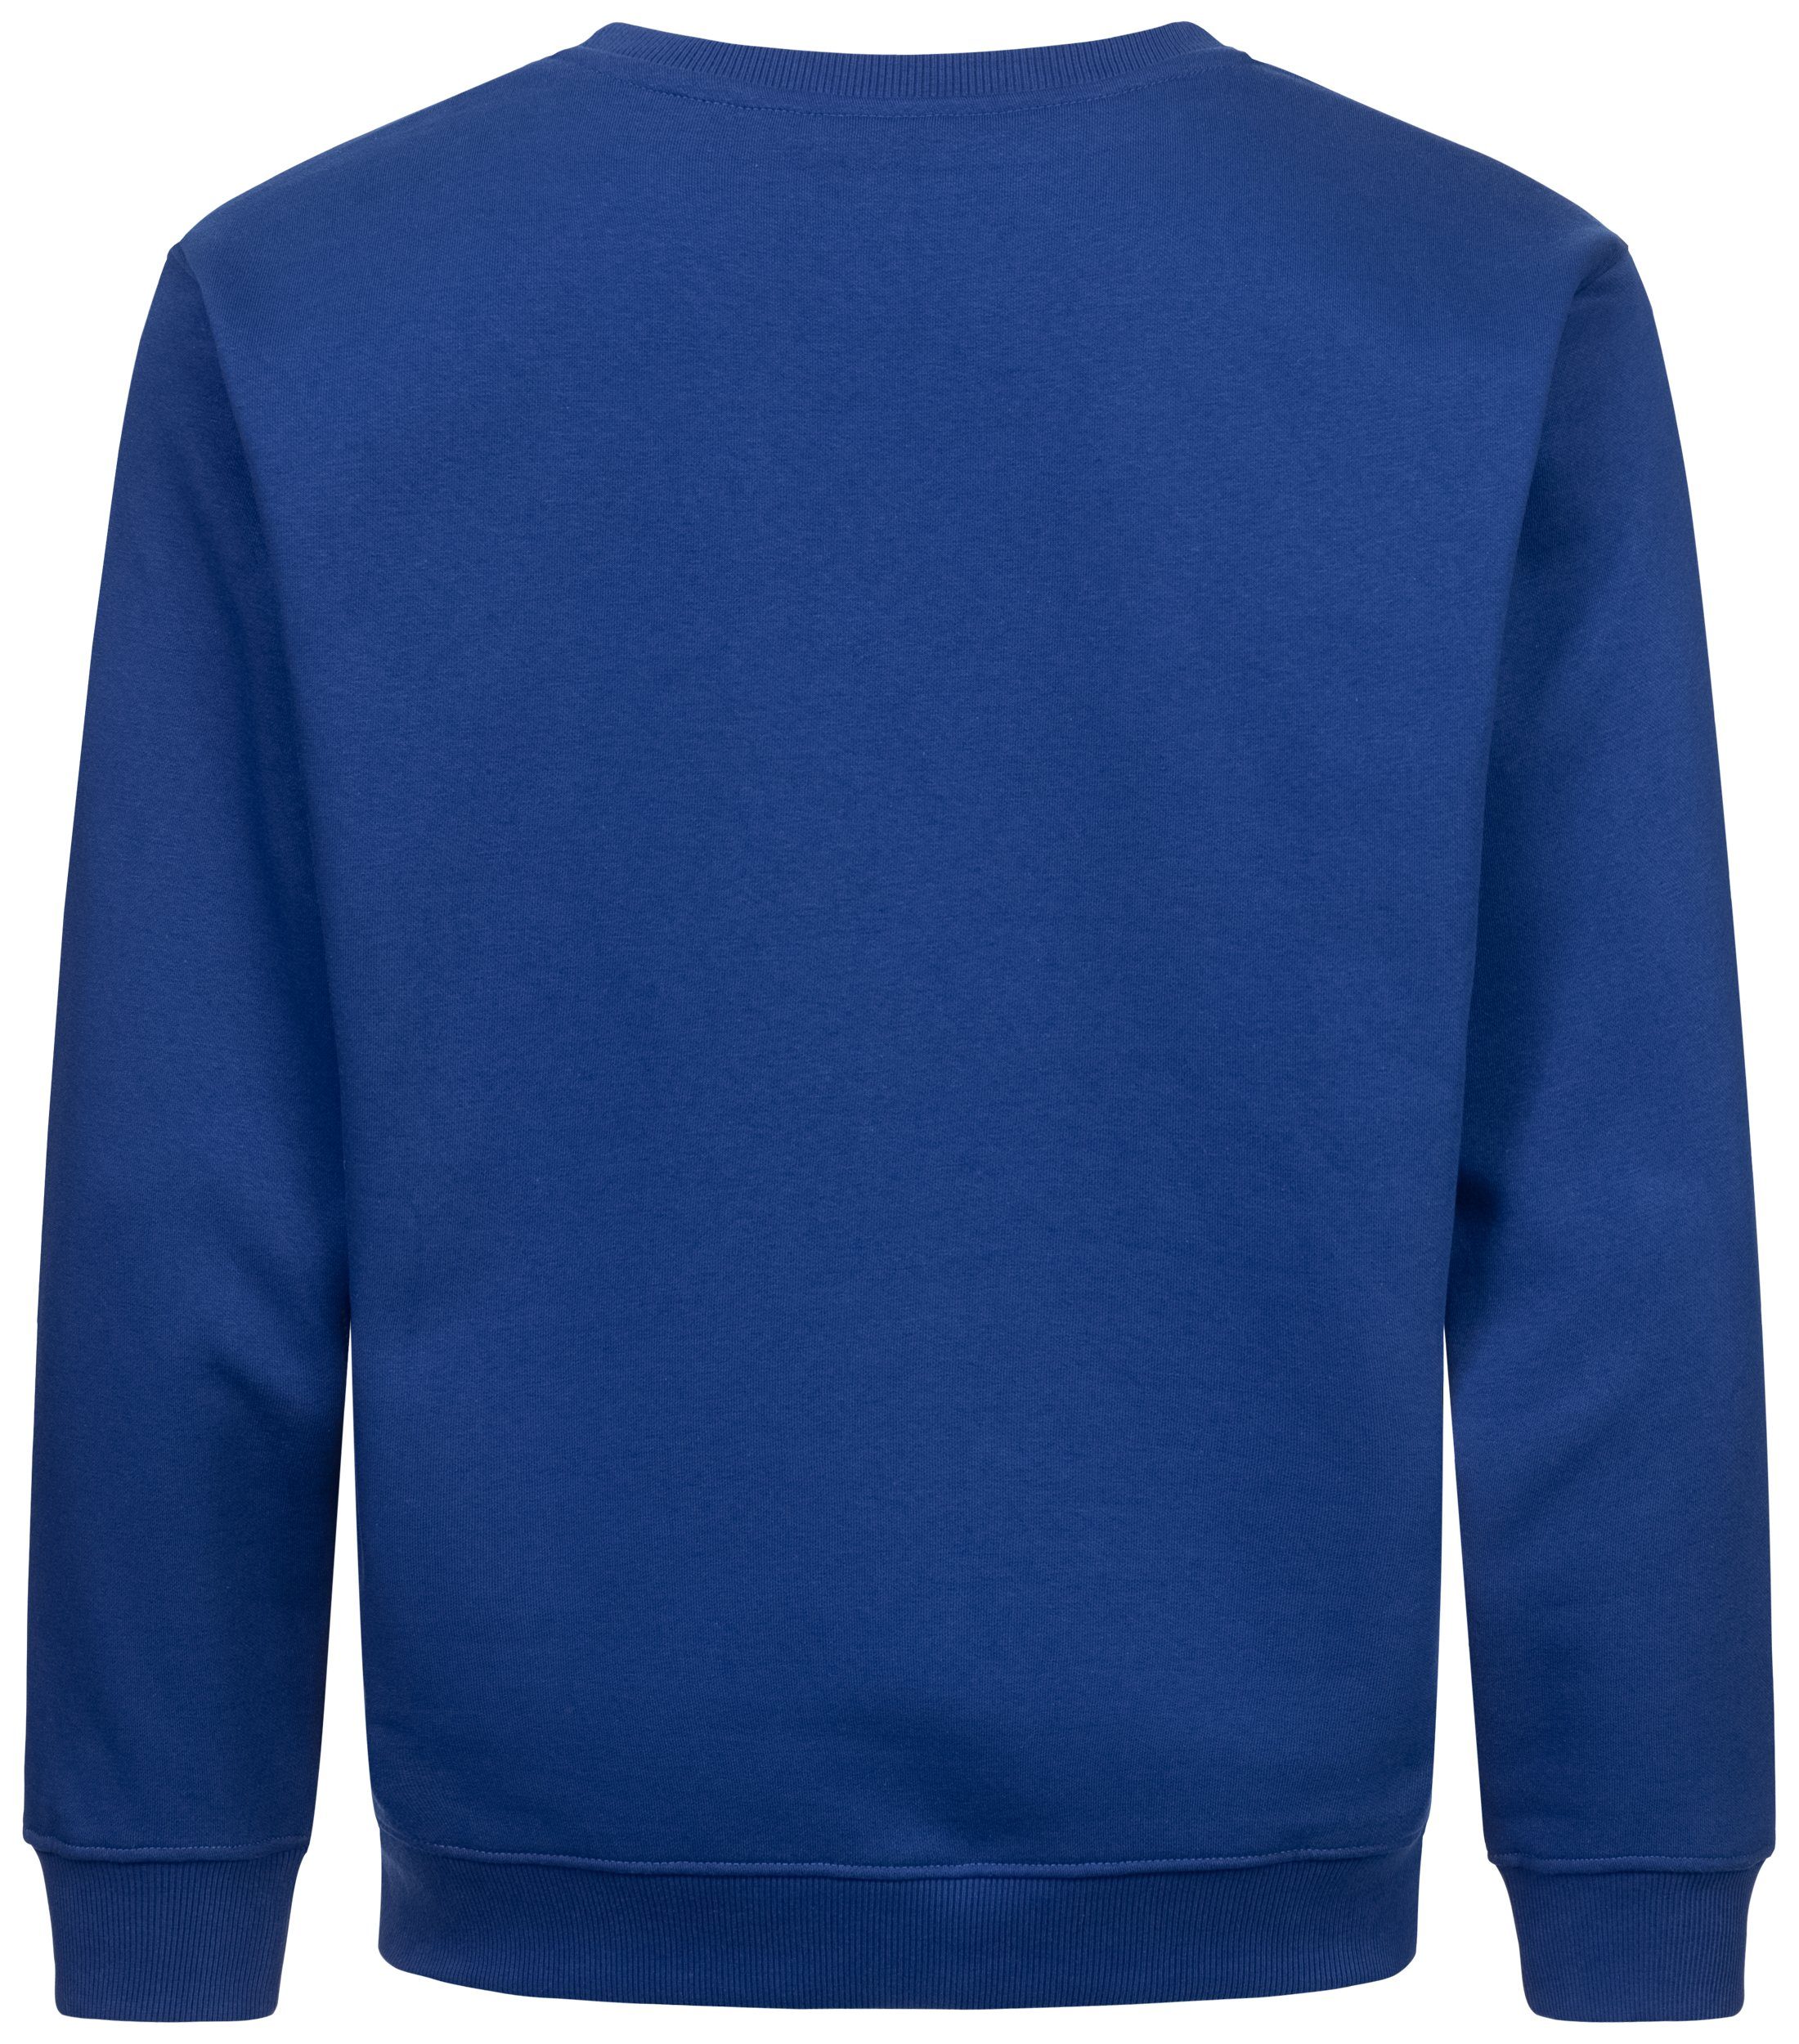 Sweatshirt Blau Männer Mercury Chilled Pullover/